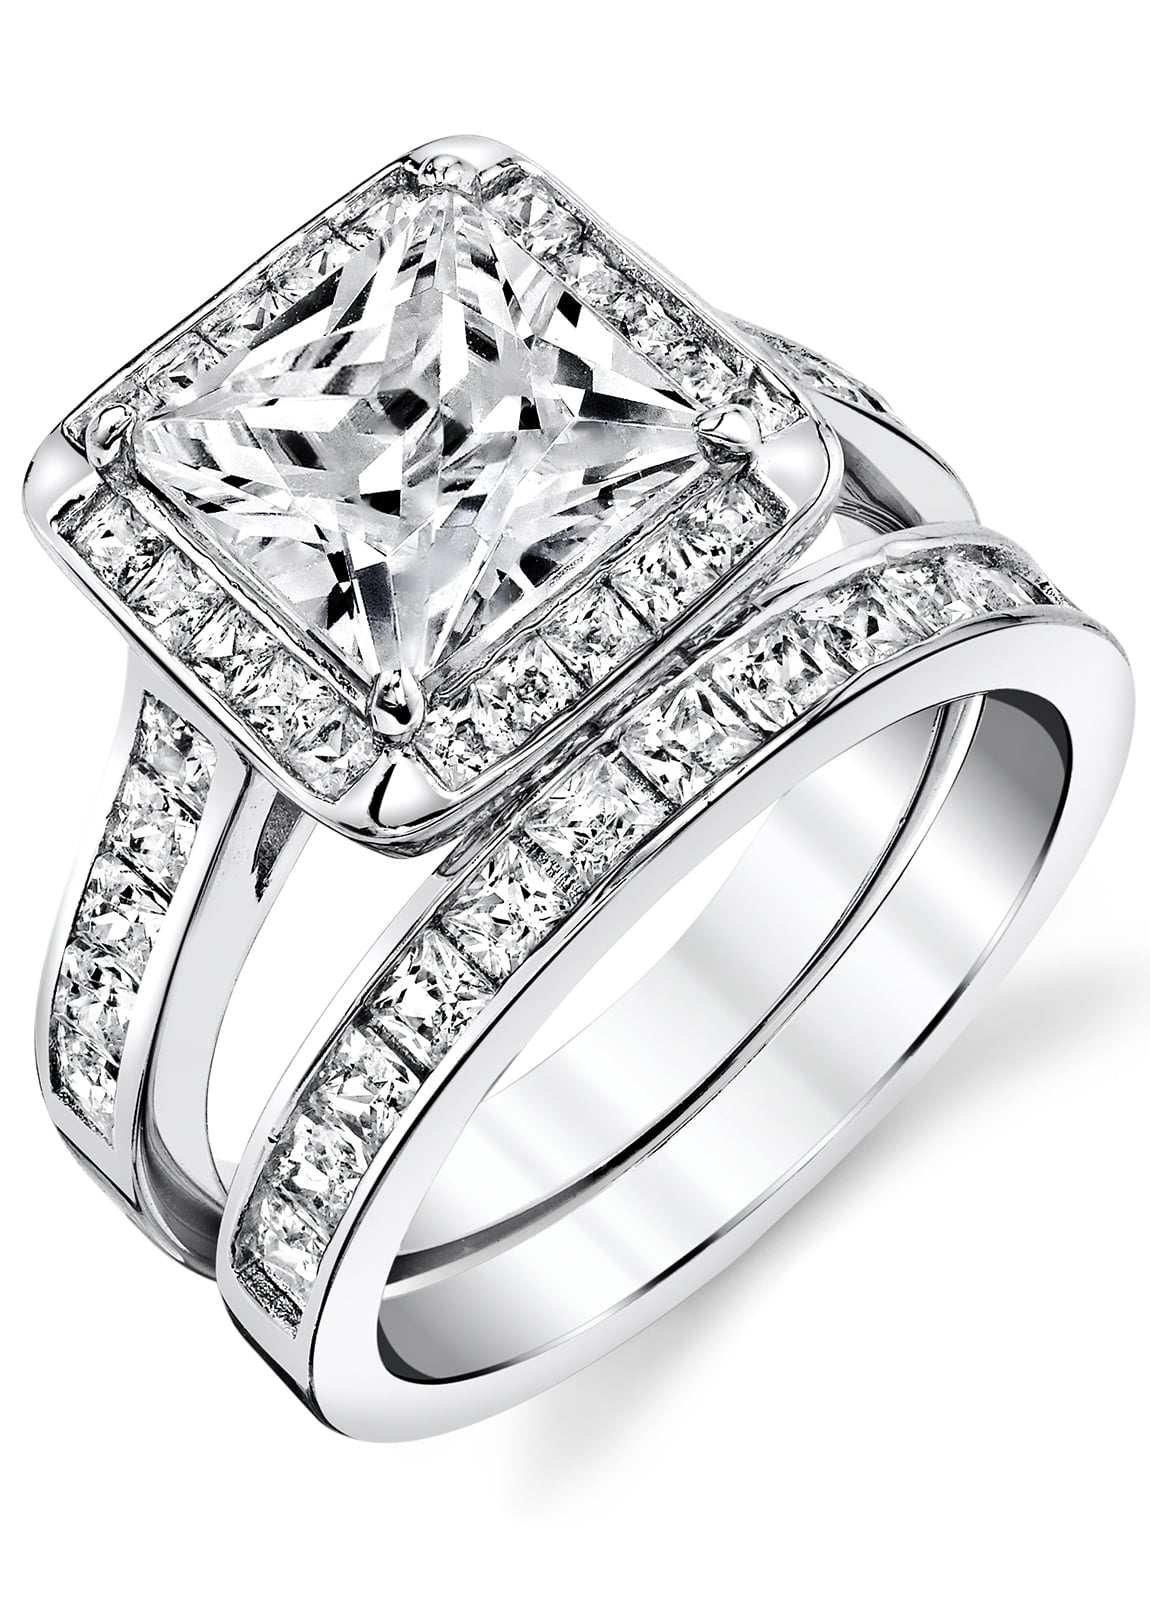 Princess Diamond Engagement Ring Wedding Bridal Band Set 925 Sterling Silver 5-9 